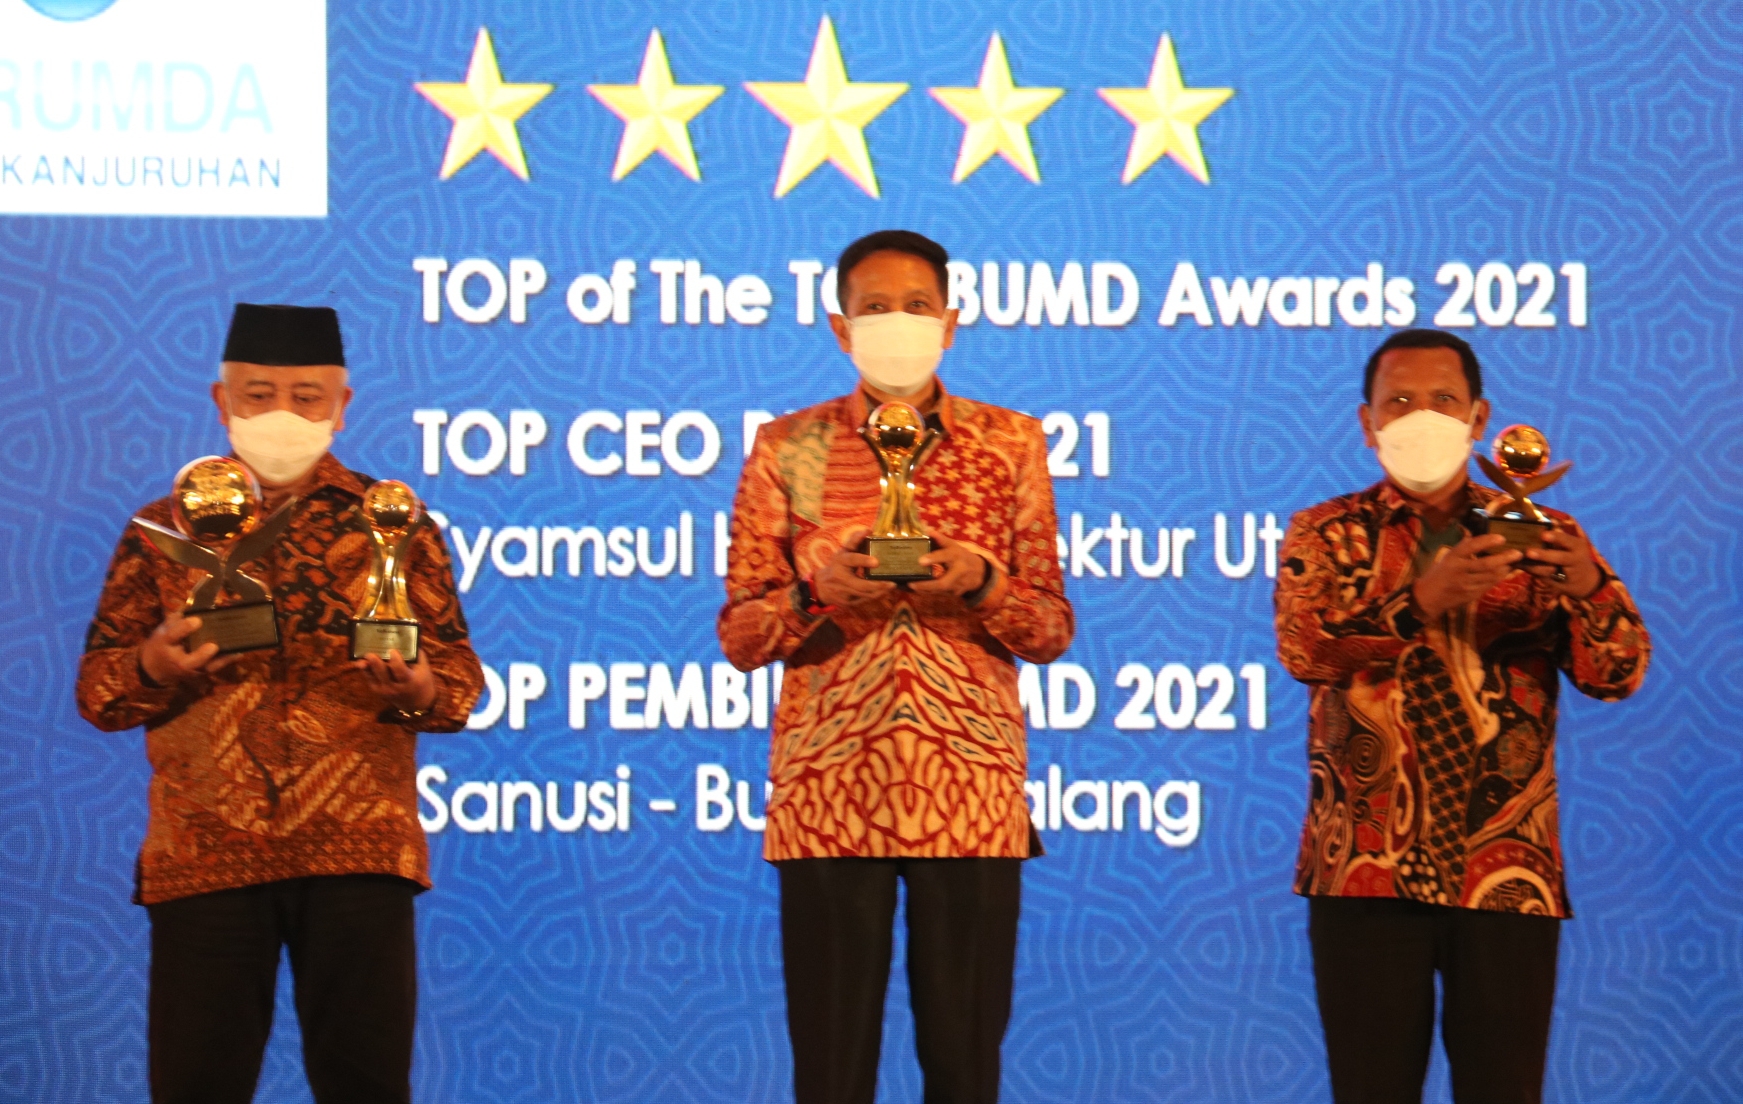 Pemkab Malang Borong Empat Penghargaan TOP BUMD Awards 2021